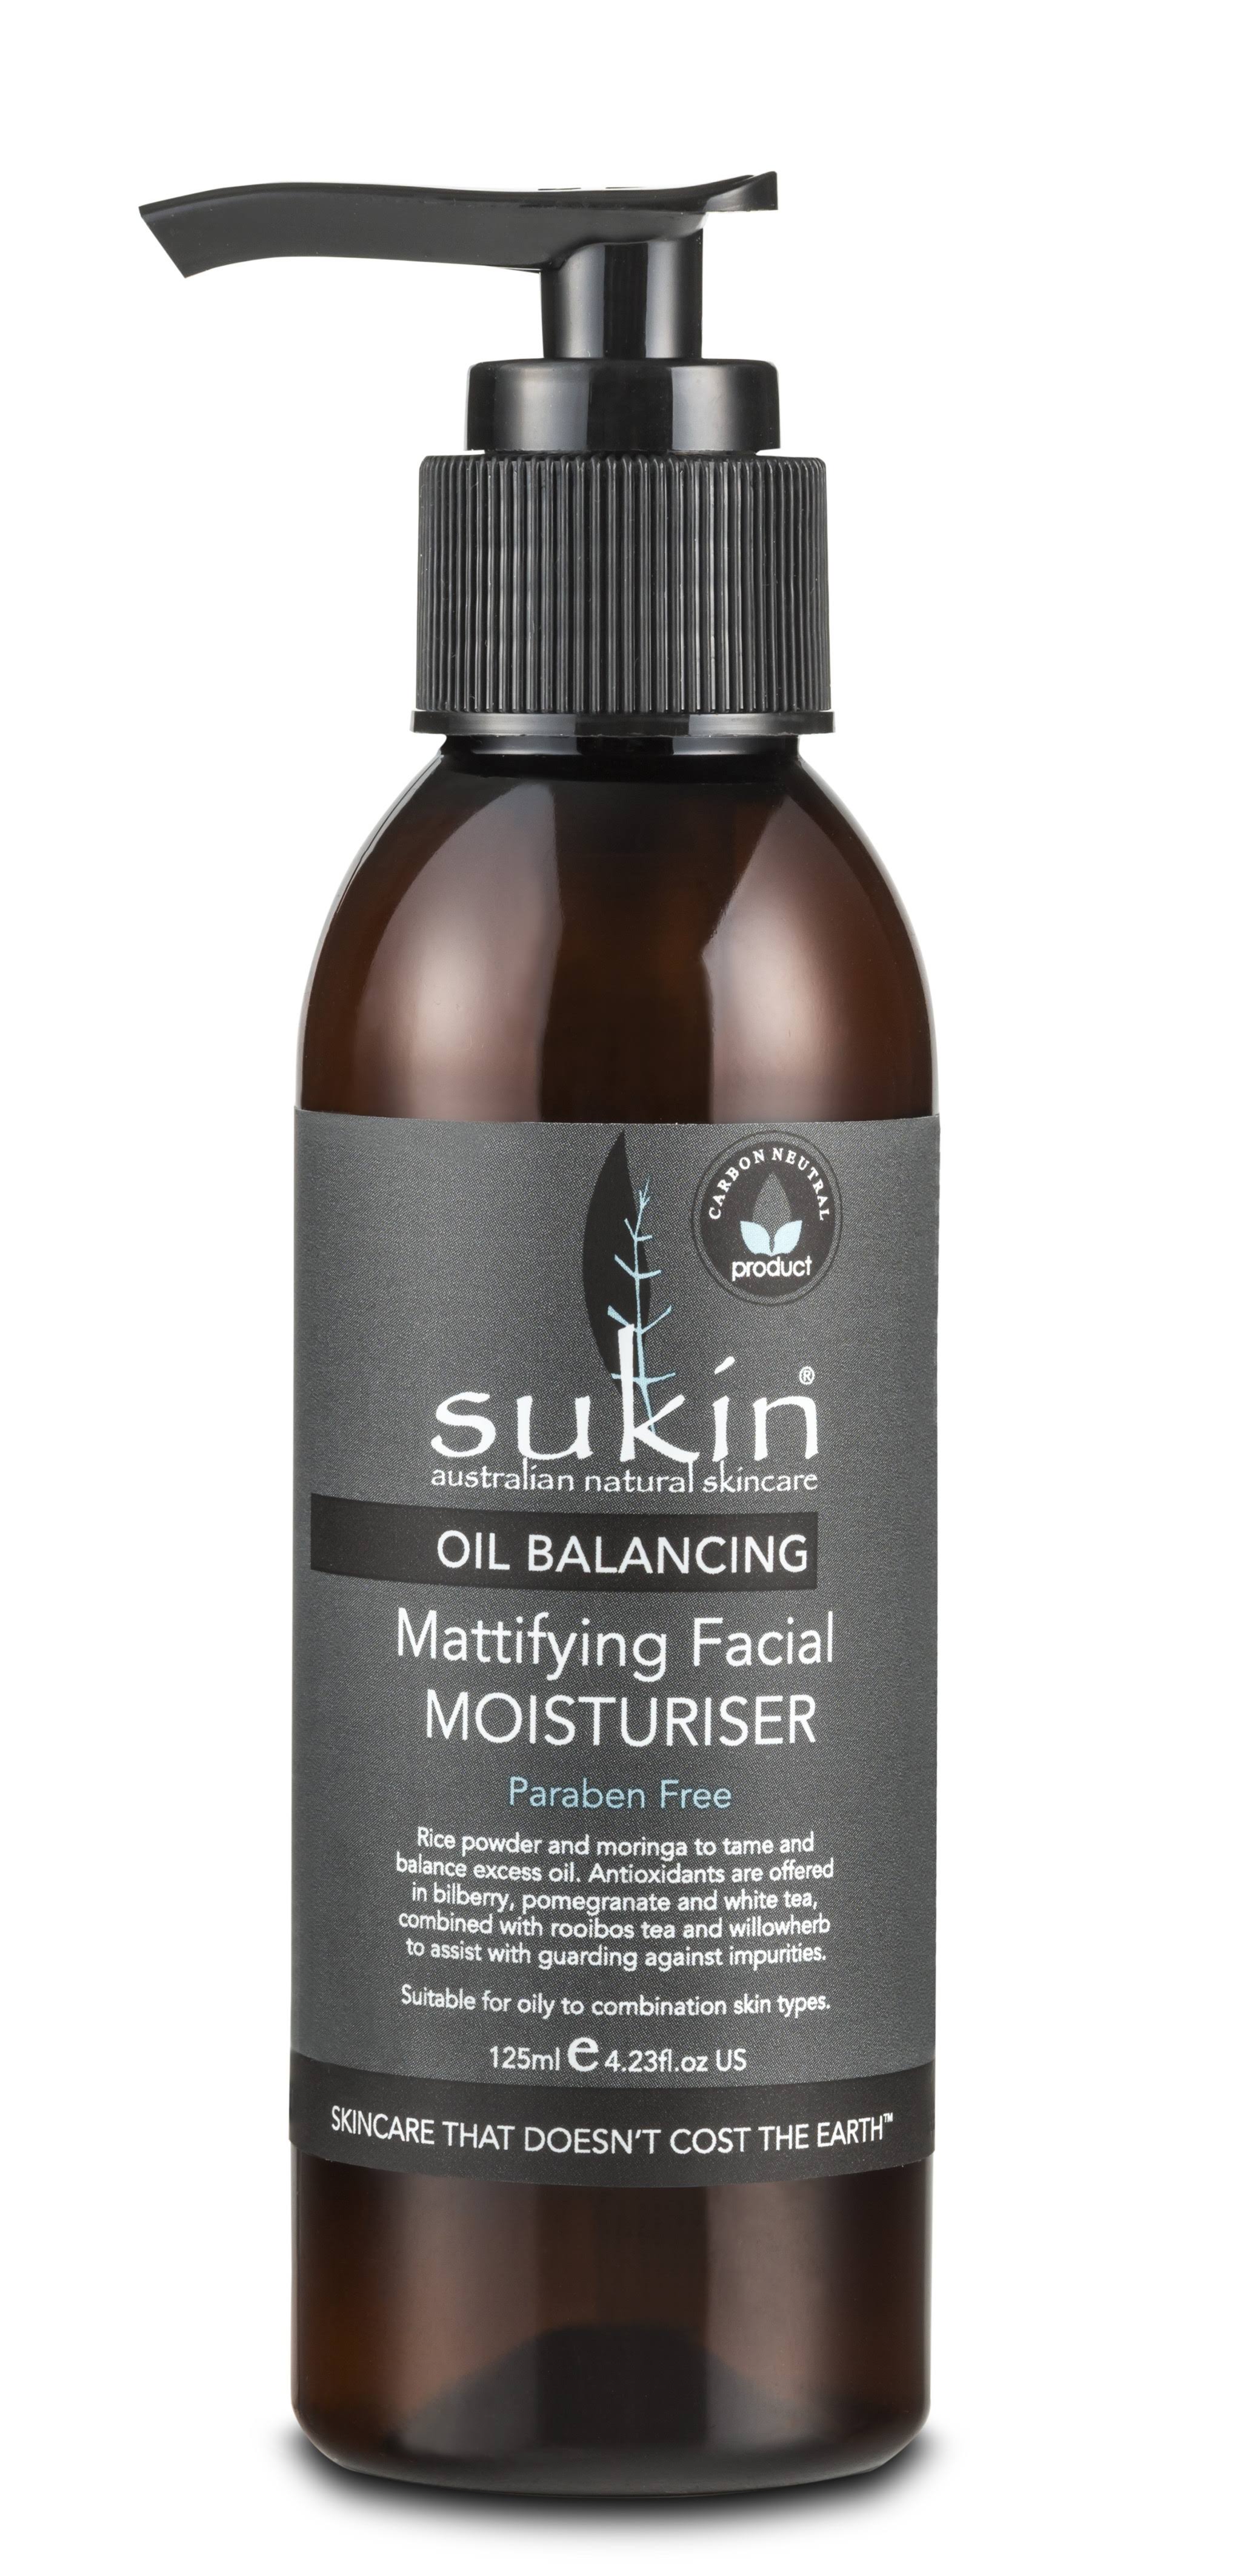 Sukin Oil Balancing Mattifying Facial Moisturiser - 125ml